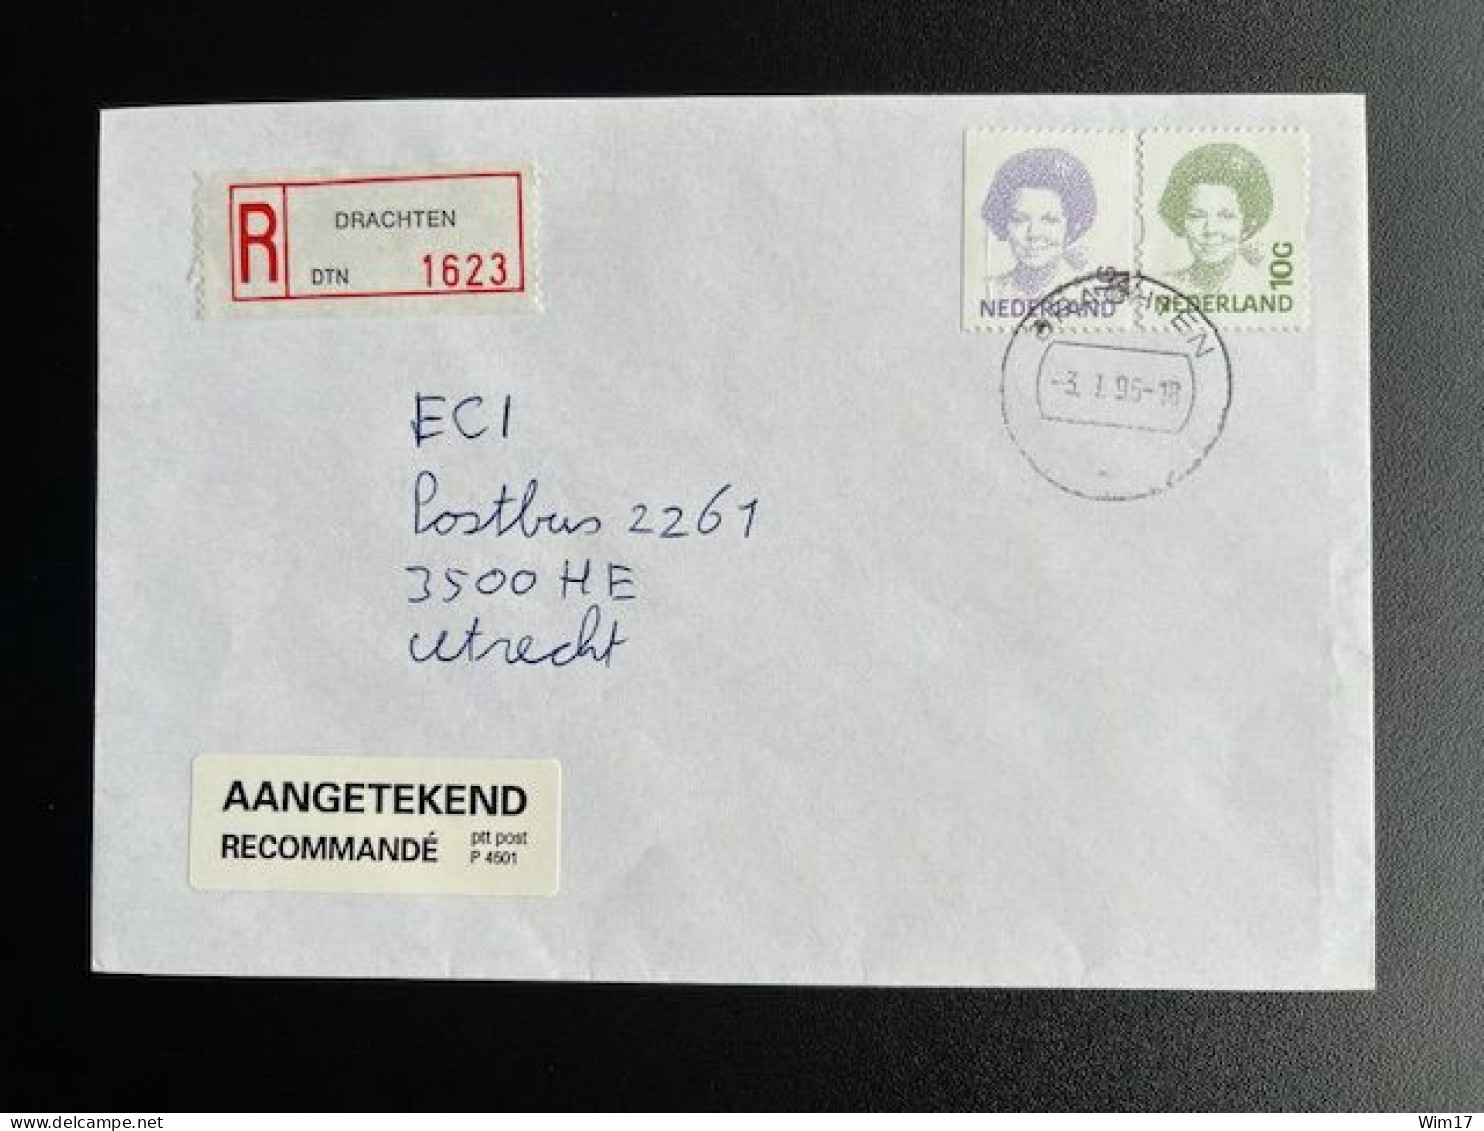 NETHERLANDS 1996 REGISTERED LETTER DRACHTEN TO UTRECHT 03-01-1996 NEDERLAND AANGETEKEND - Covers & Documents